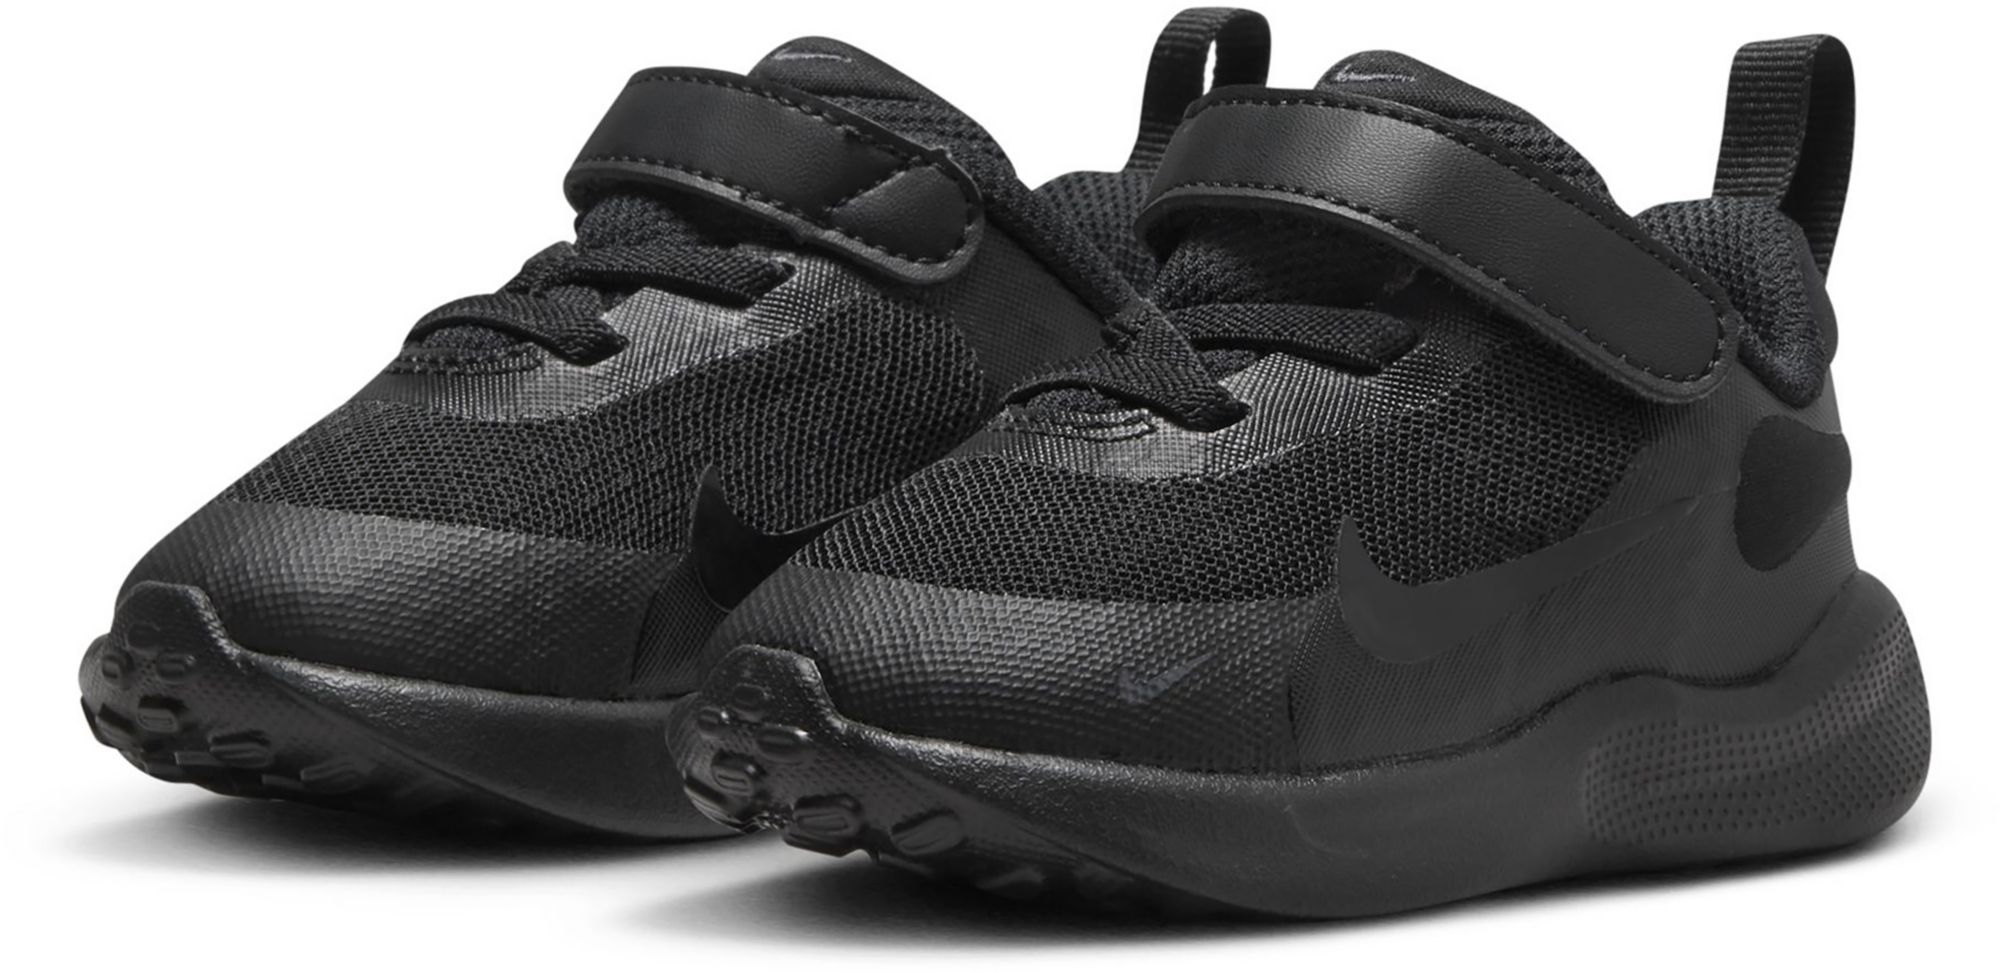 Nike Toddler Revolution 7 Running Shoes